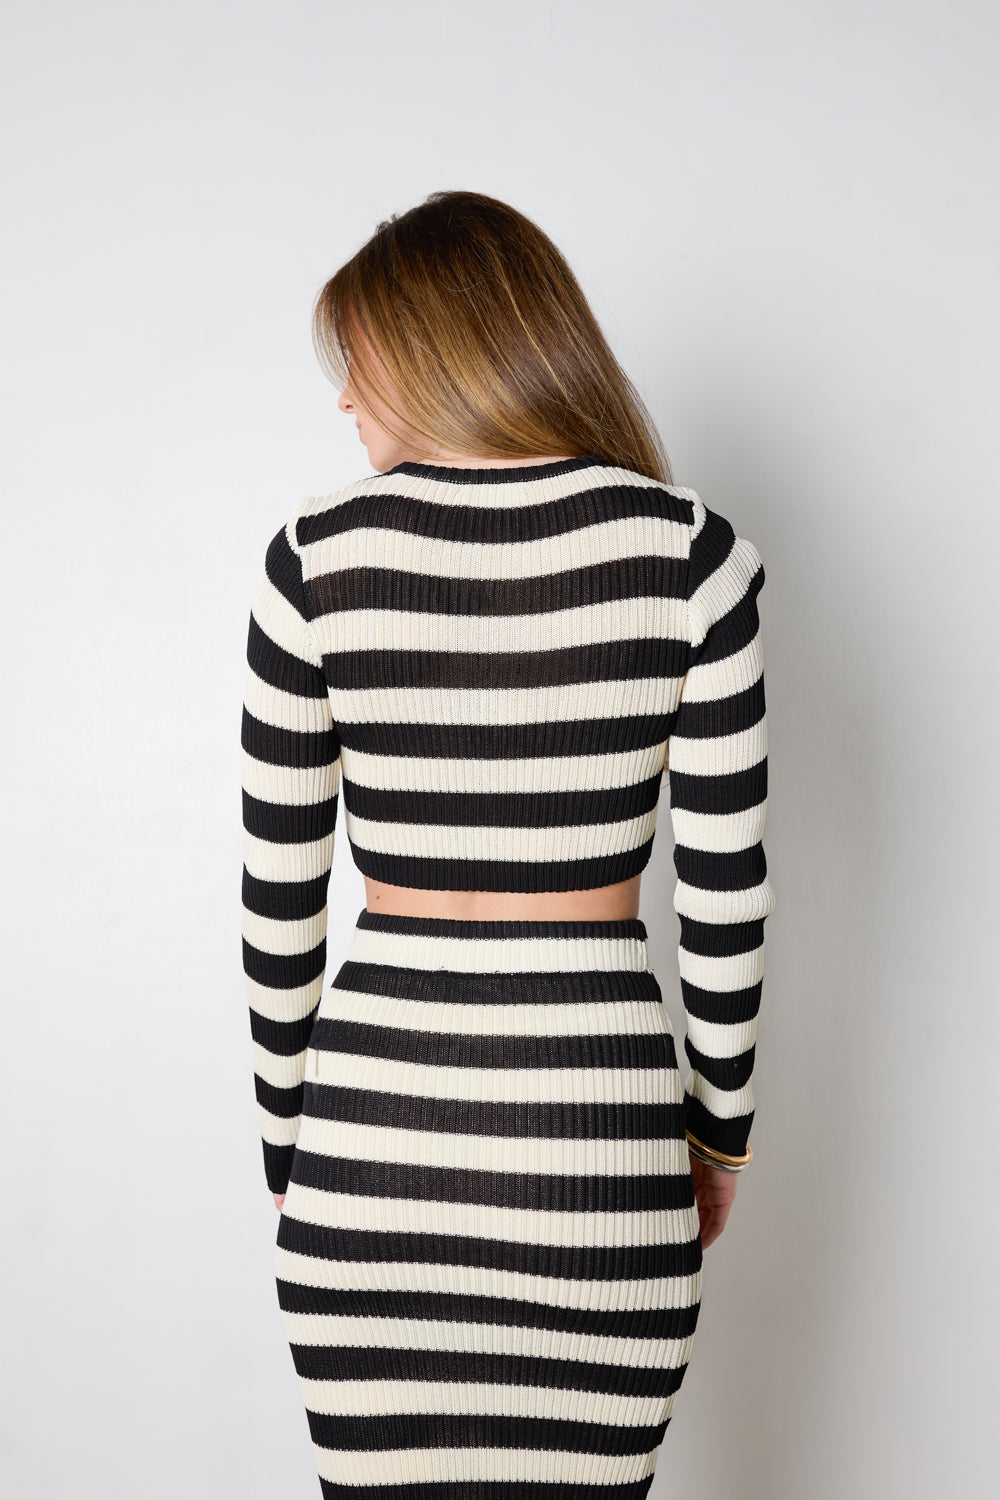 black white stripe top